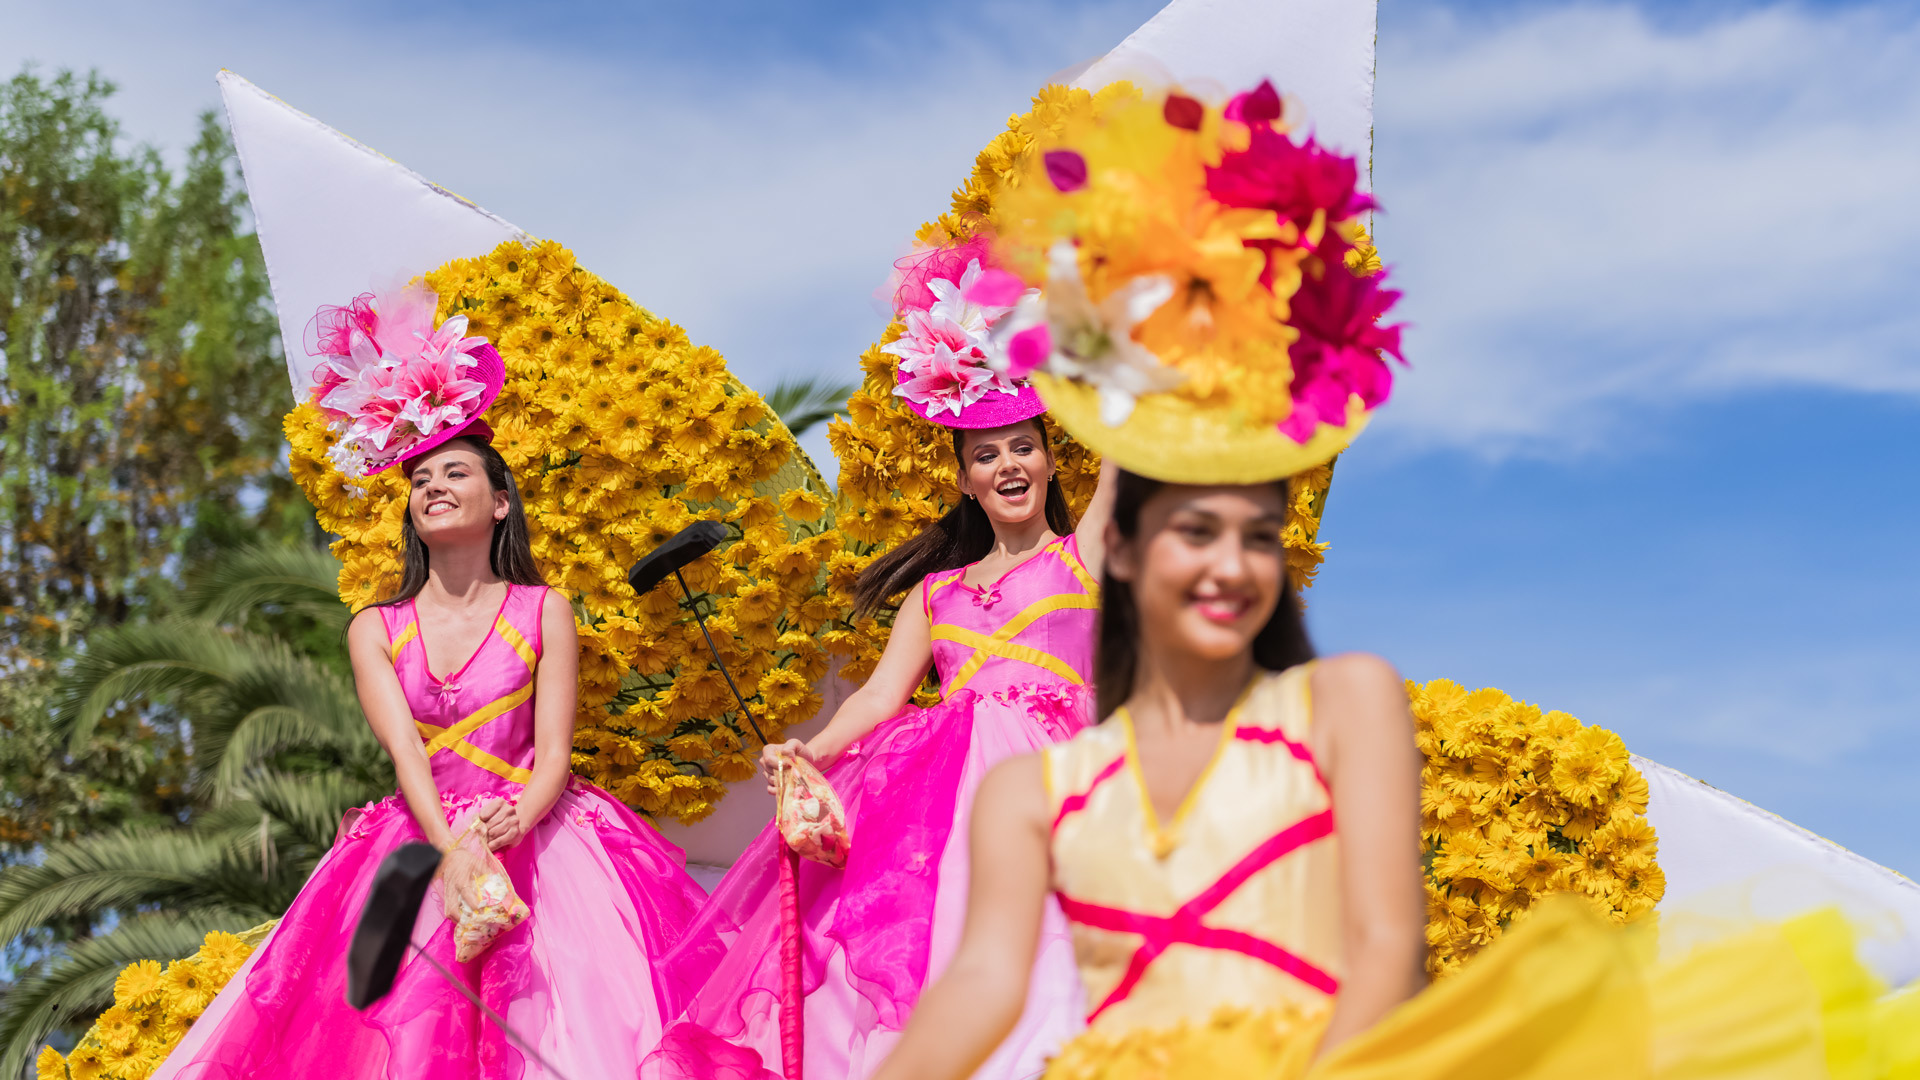 Flower Festival - Visit Madeira  Madeira Islands Tourism Board official  website